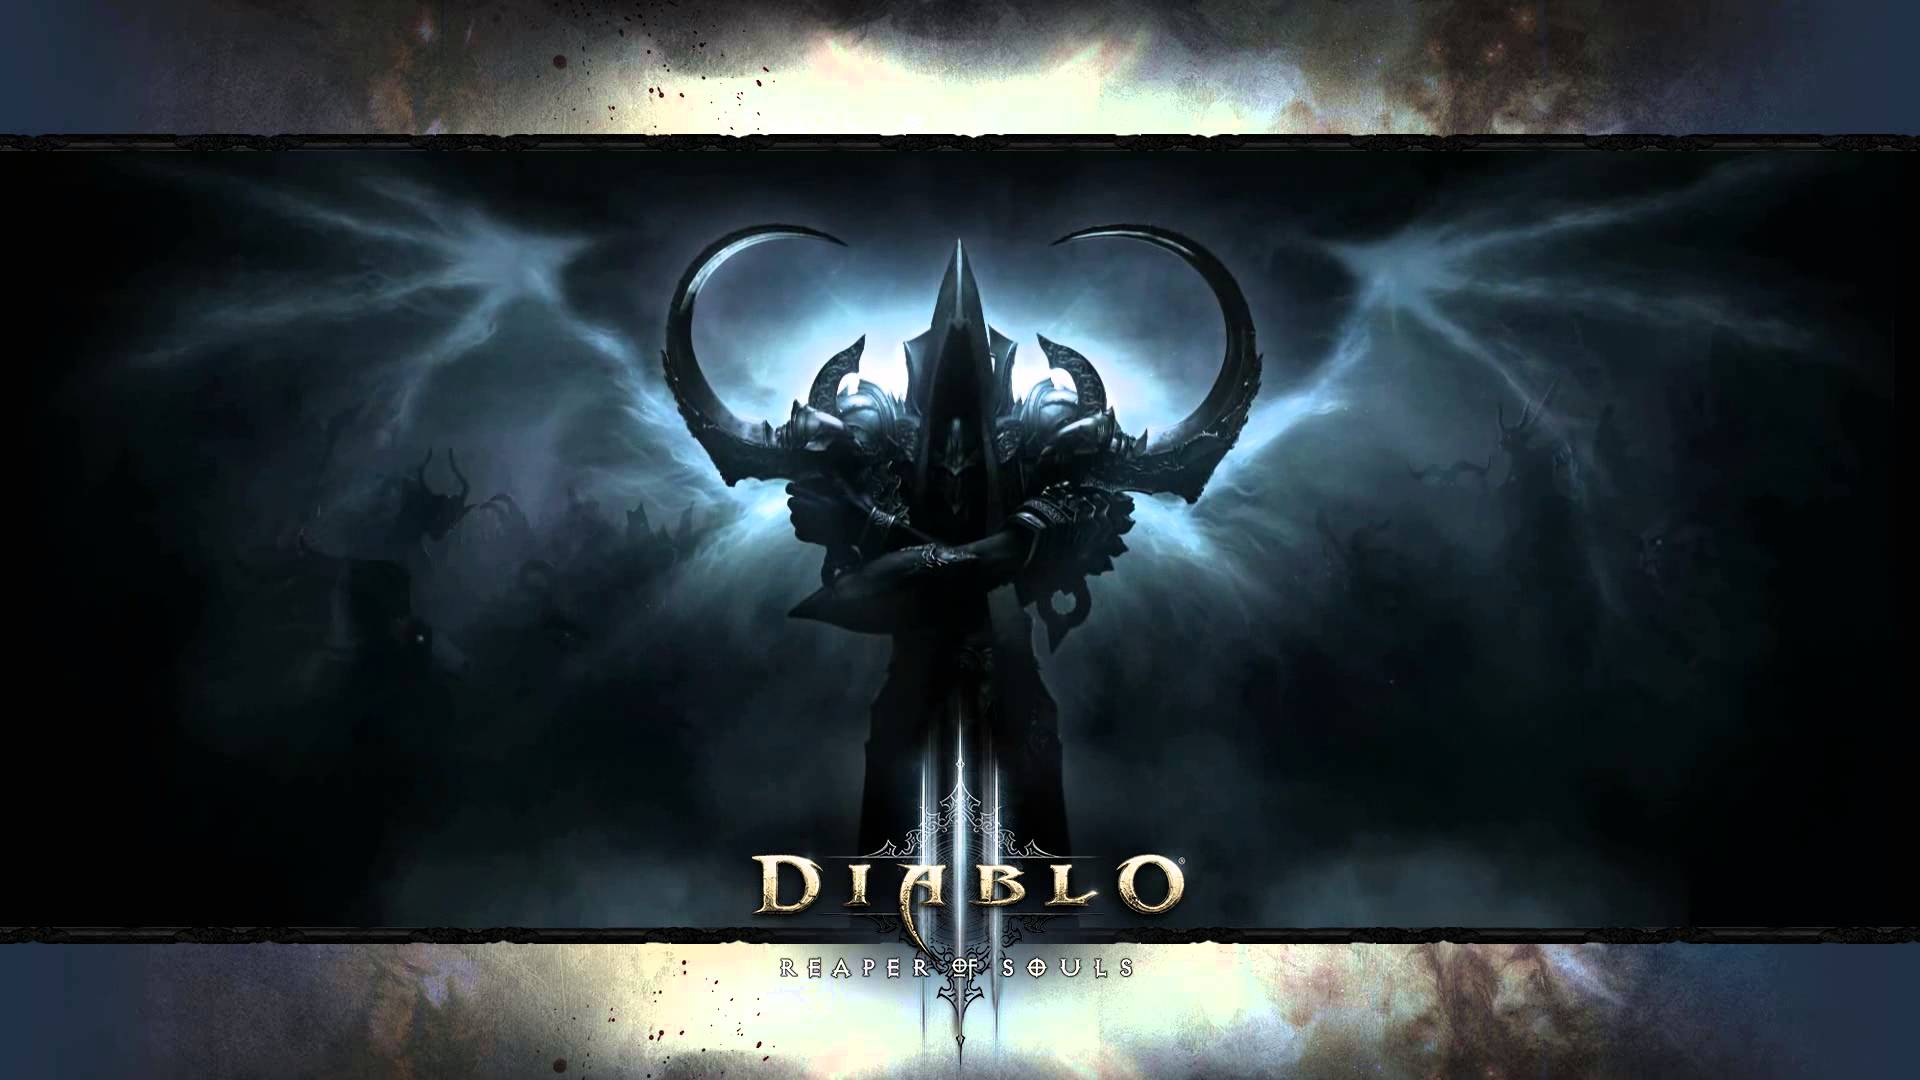 Diablo 3: Reaper of Souls - Malthael (DreamScene) - YouTube